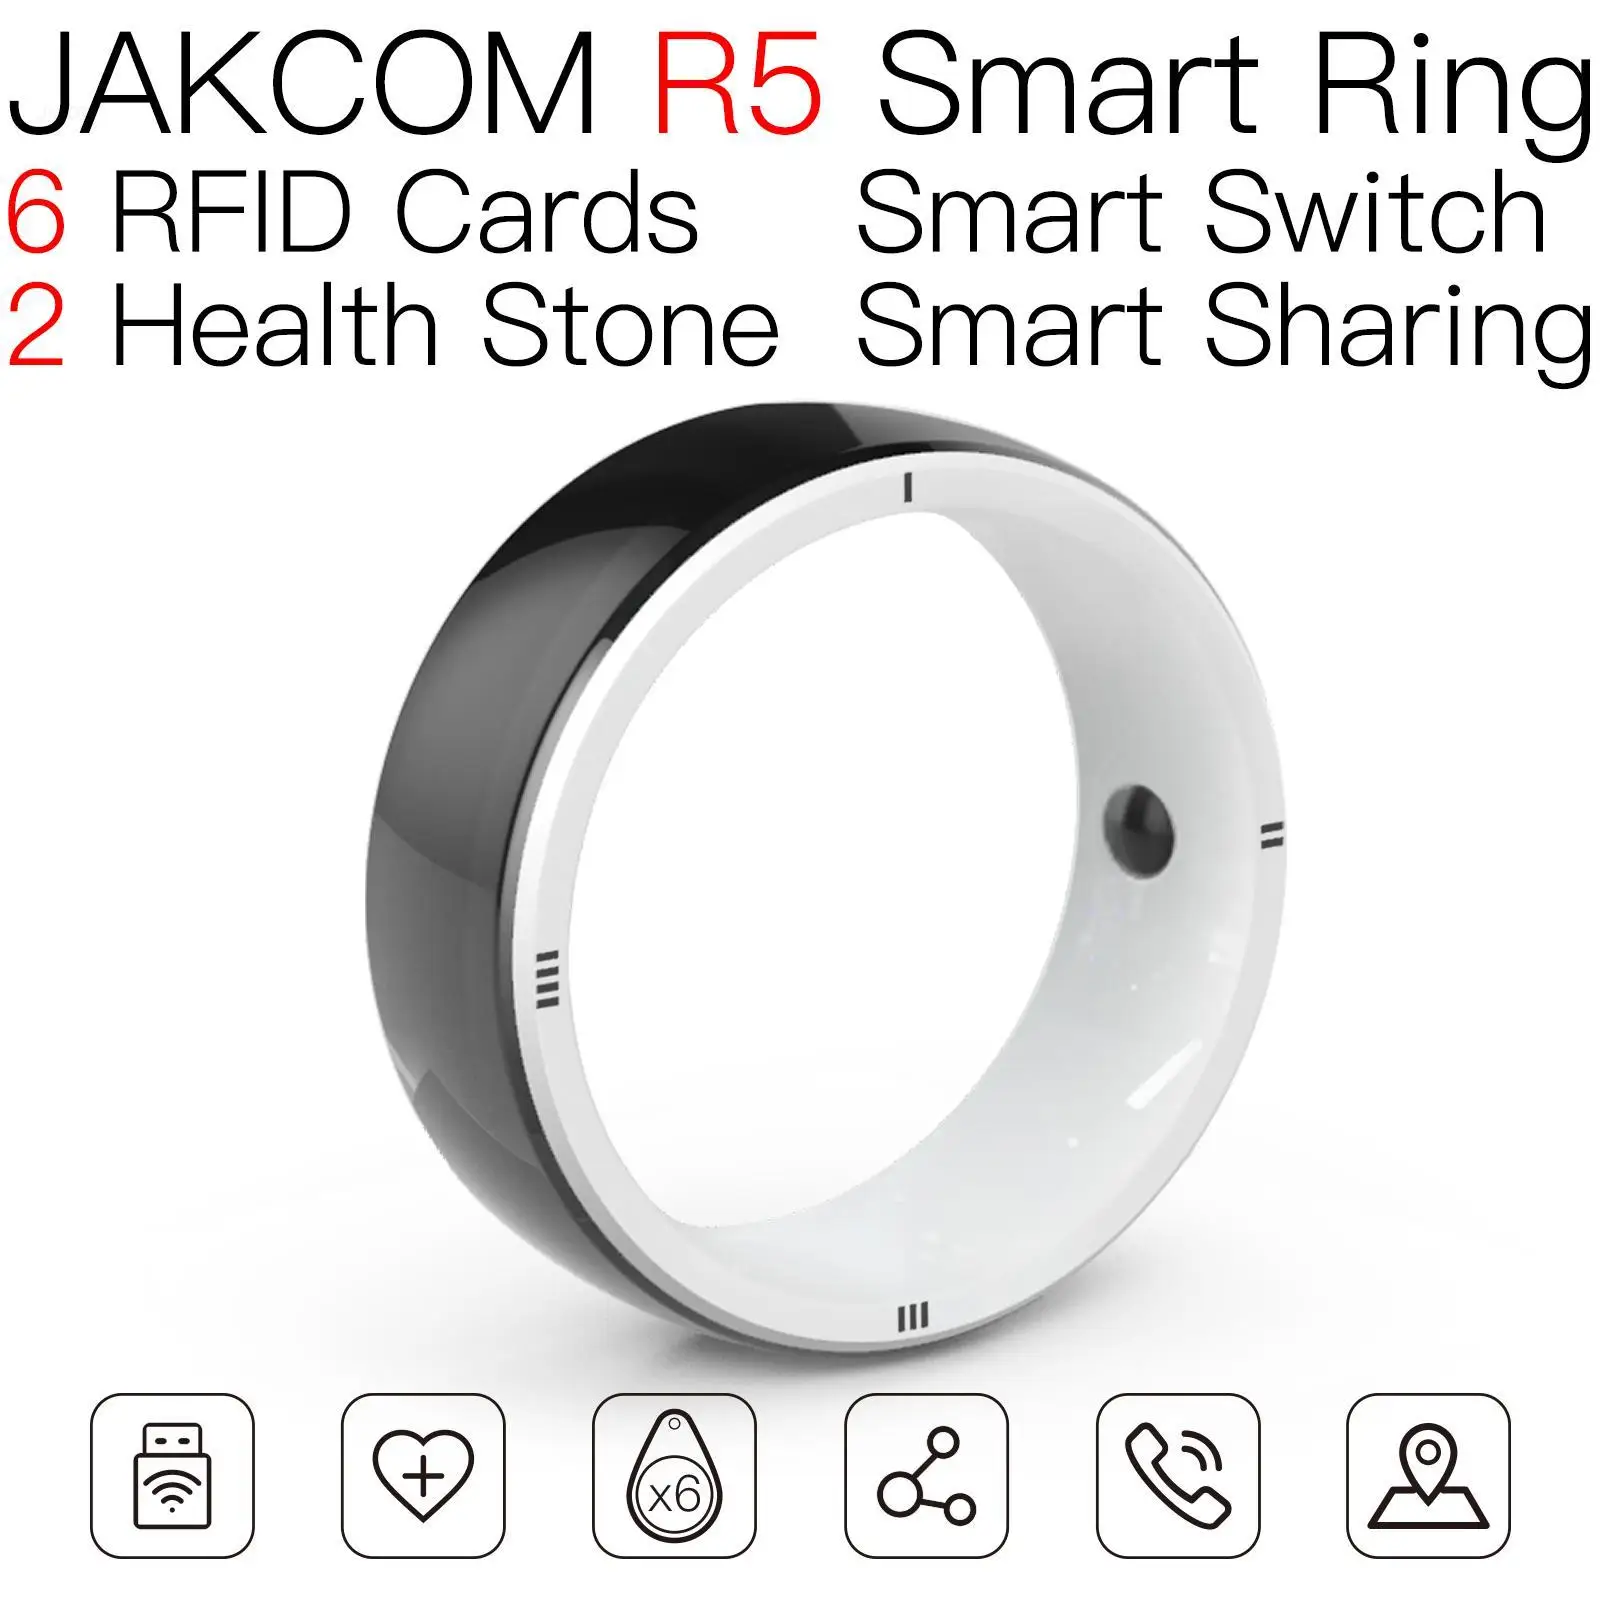 

JAKCOM R5 Smart Ring Super value than animal crossimg new horizon karta 1tb nfc card customiz designs rfid id adhesive tag nail